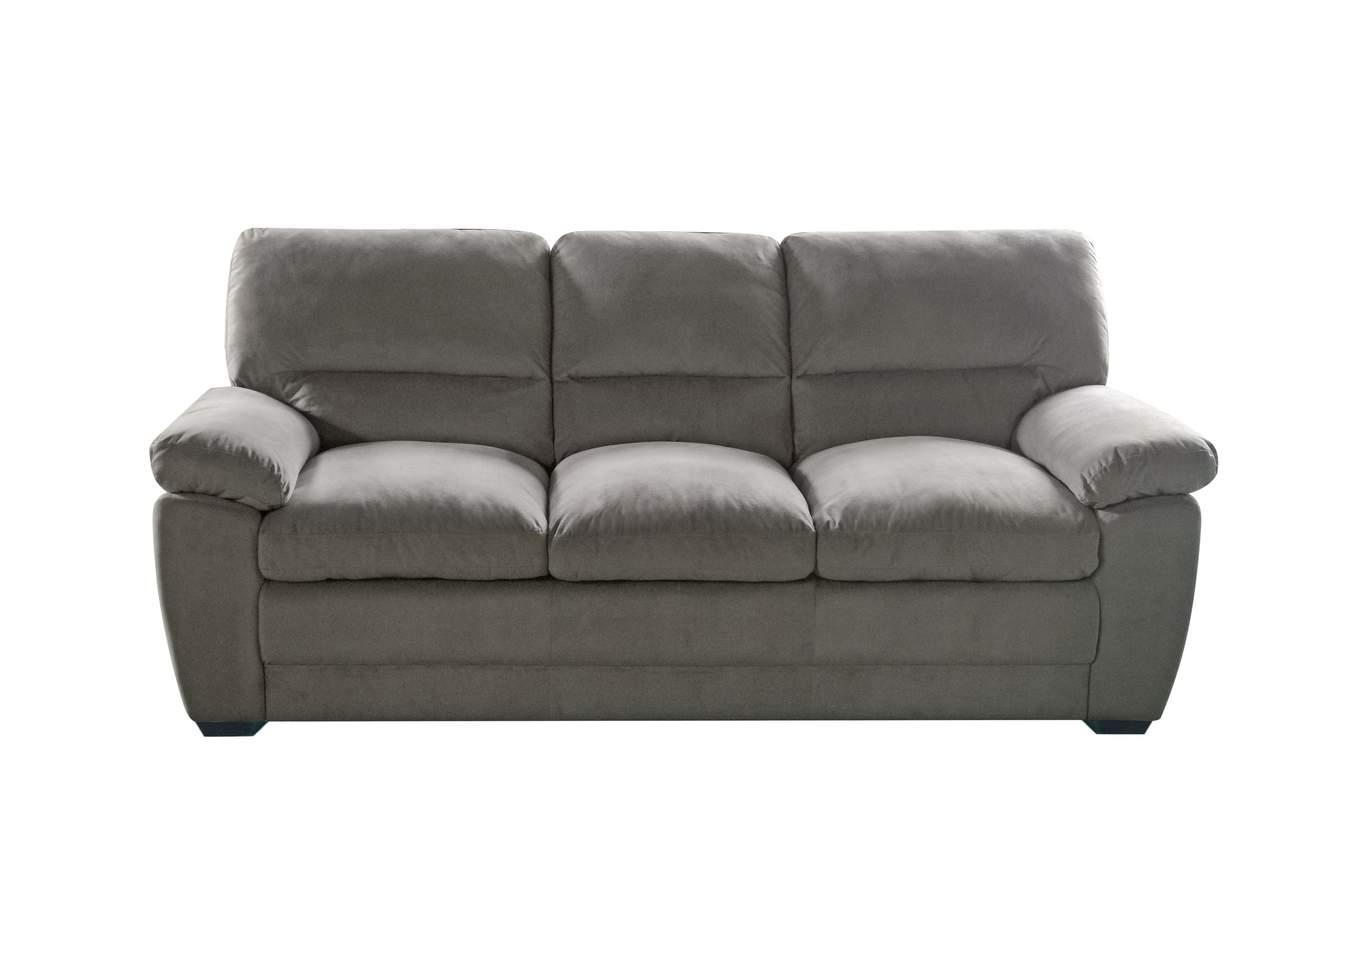 Contemporary, Modern Sofa MAXX GHF-808857609687 in Gray Fabric